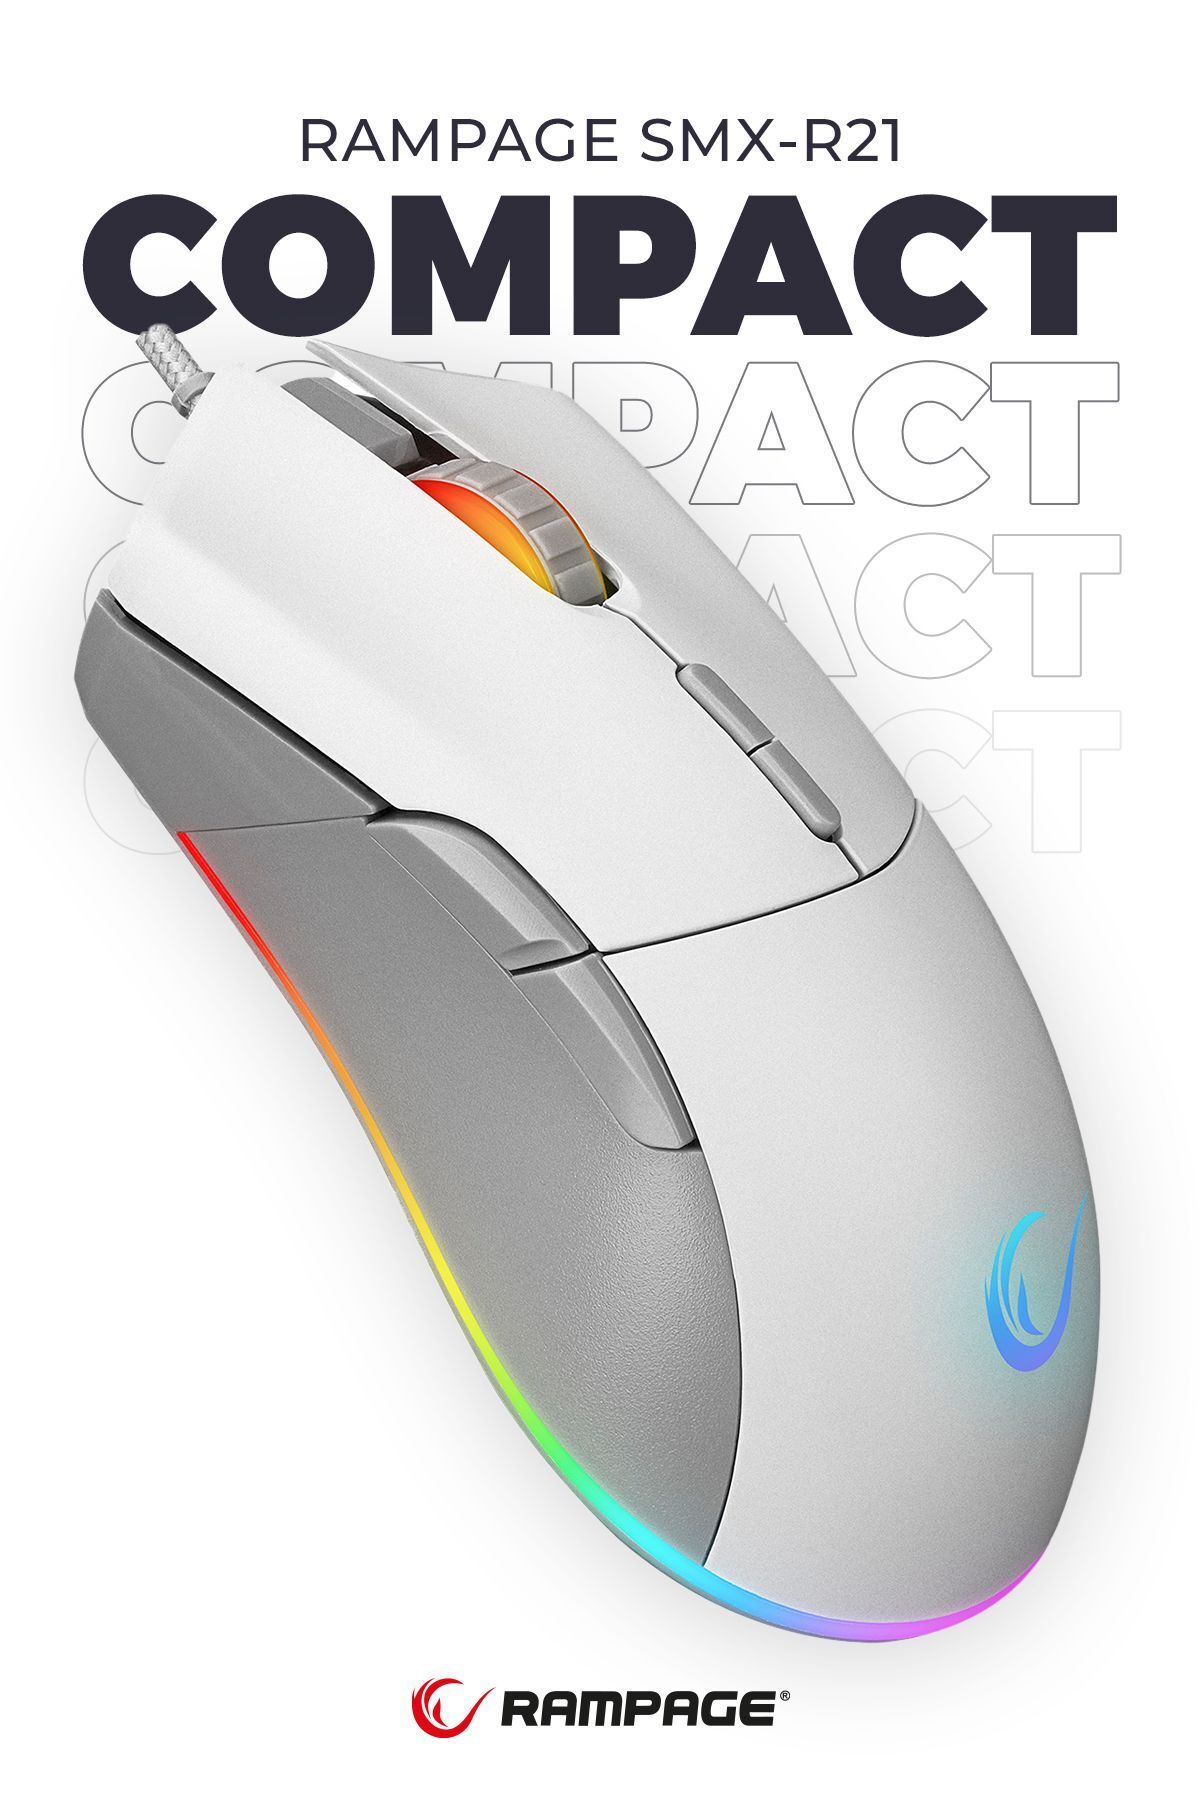 Rampage Smx-r21 Compact Usb Beyaz Rgb Ledli Makrolu 12800dpi / 1000hz Drag Click Gaming Oyuncu Mouse